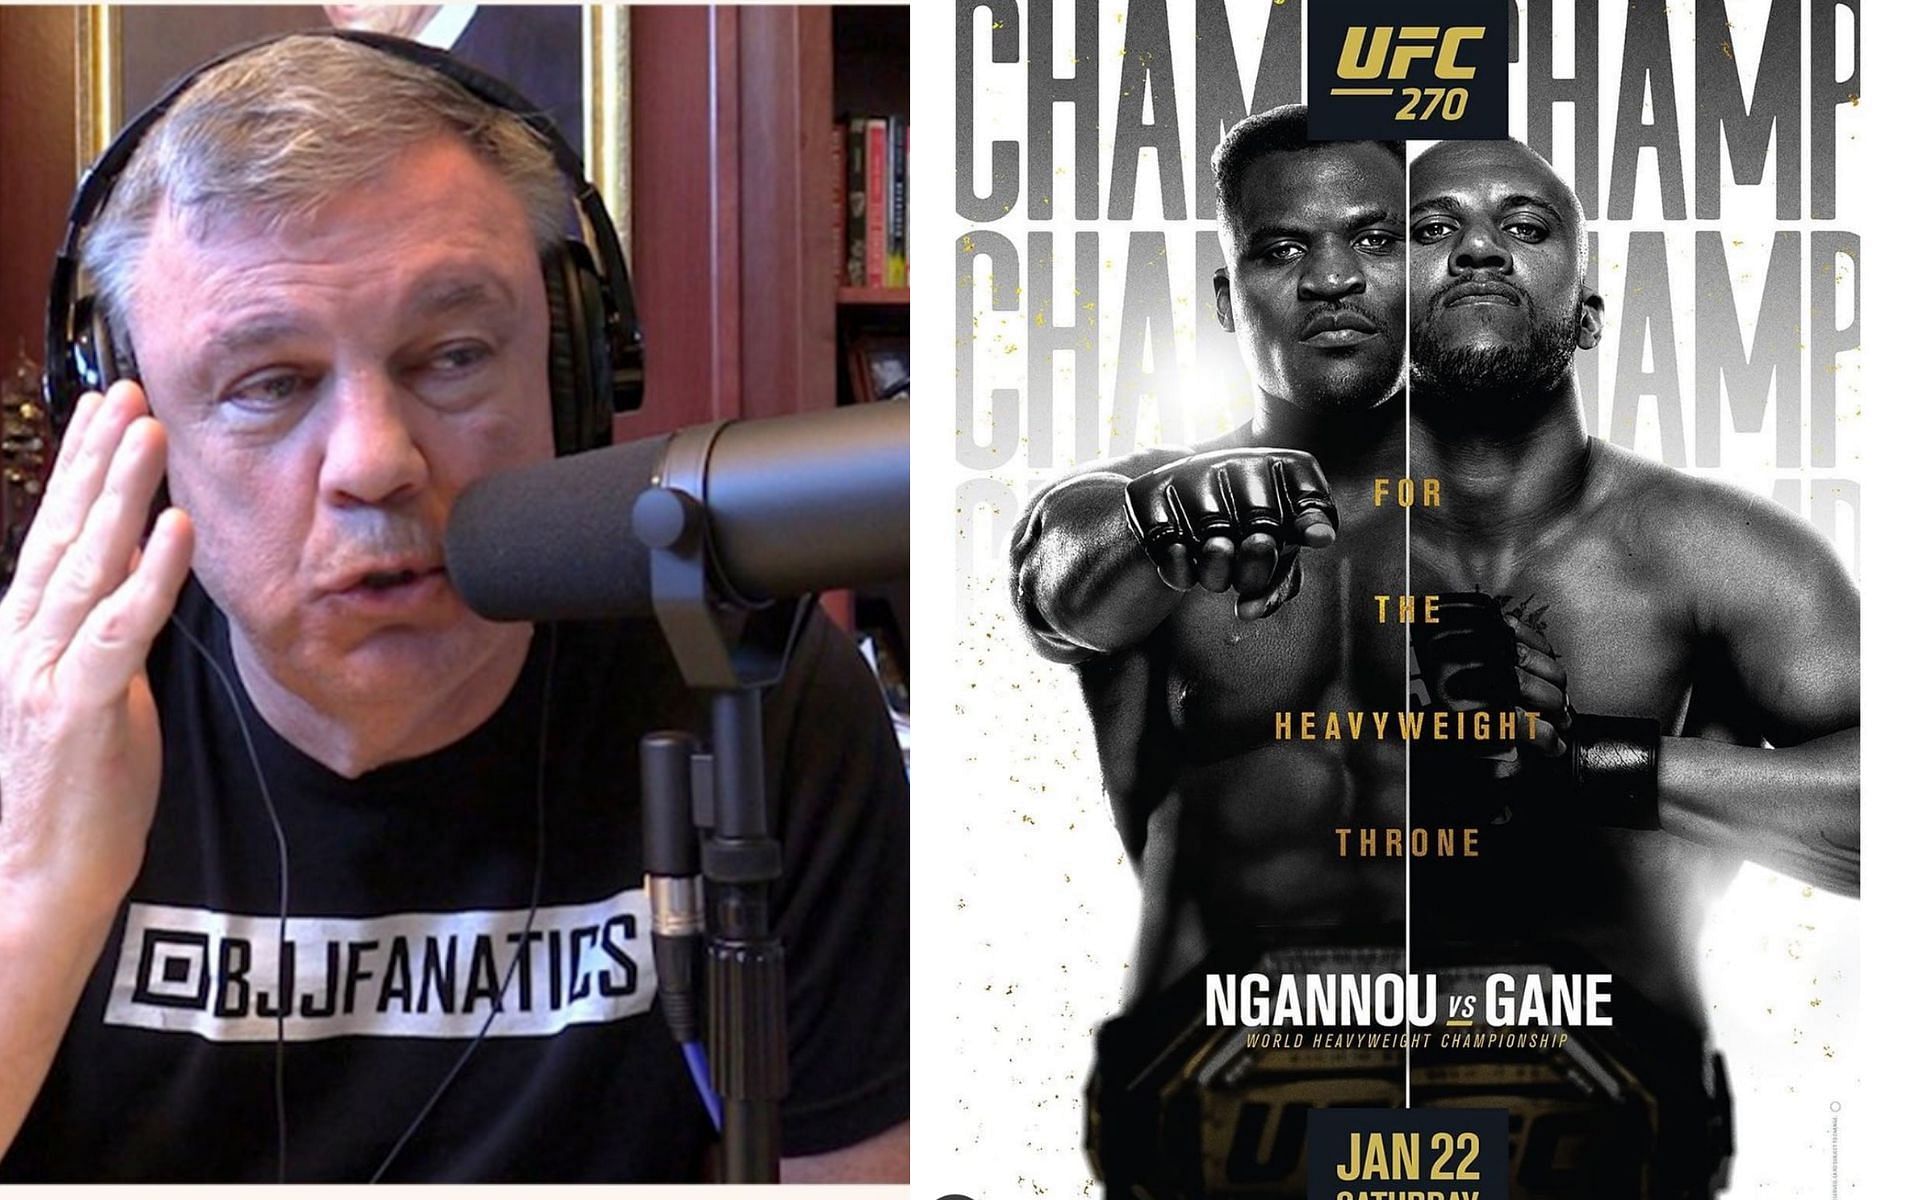 Teddy Atlas (left), Official poster of Francis Ngannou vs. Ciryl Gane for UFC 270 (right) [Credits: @bon_gamin via Instagram and Teddy Atlas via YouTube]